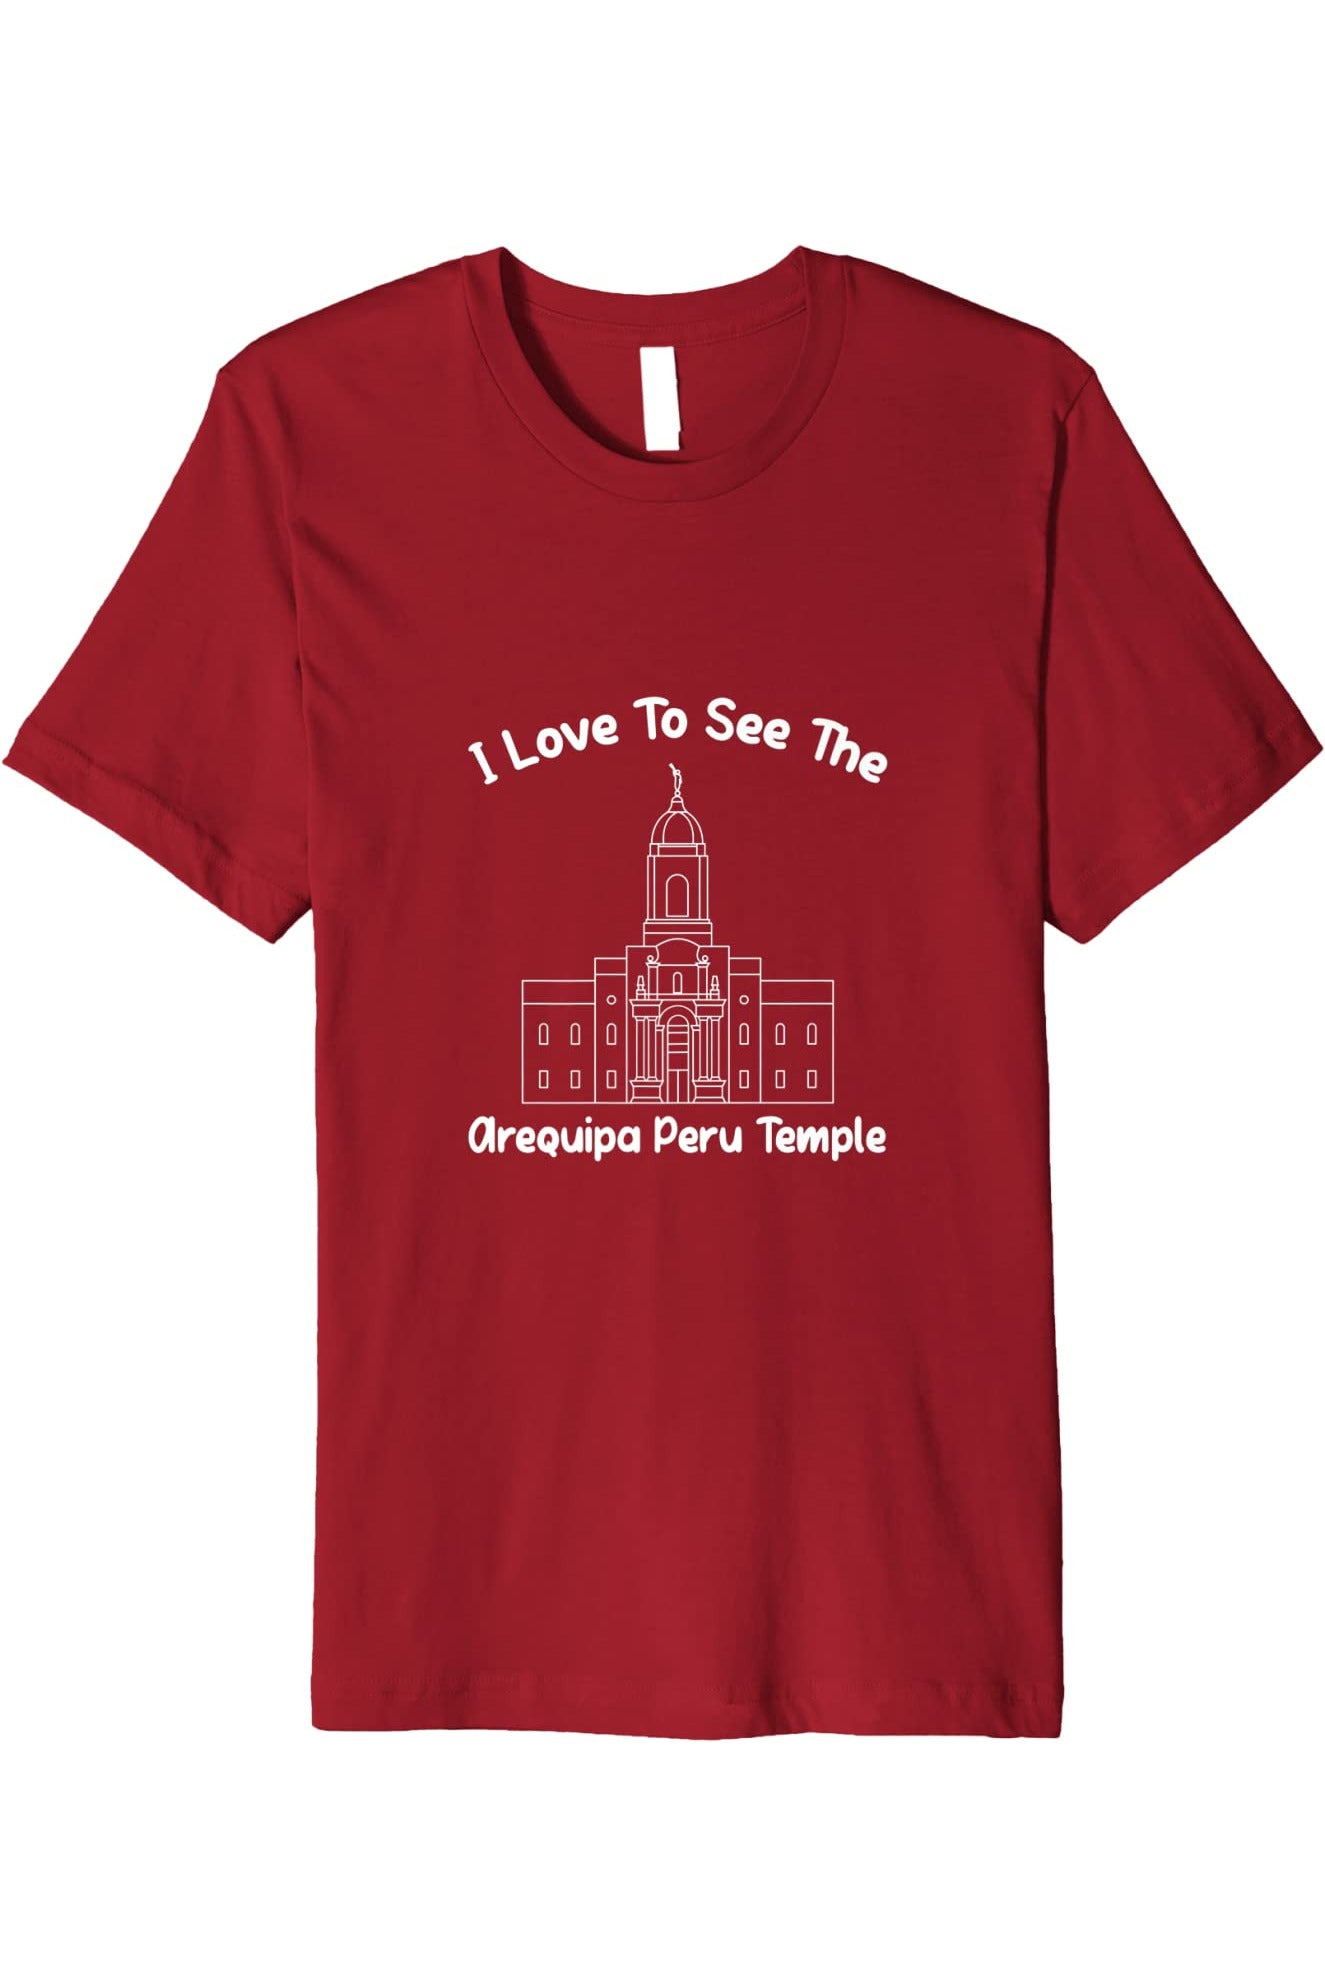 Arequipa Peru Temple T-Shirt - Premium - Primary Style (English) US